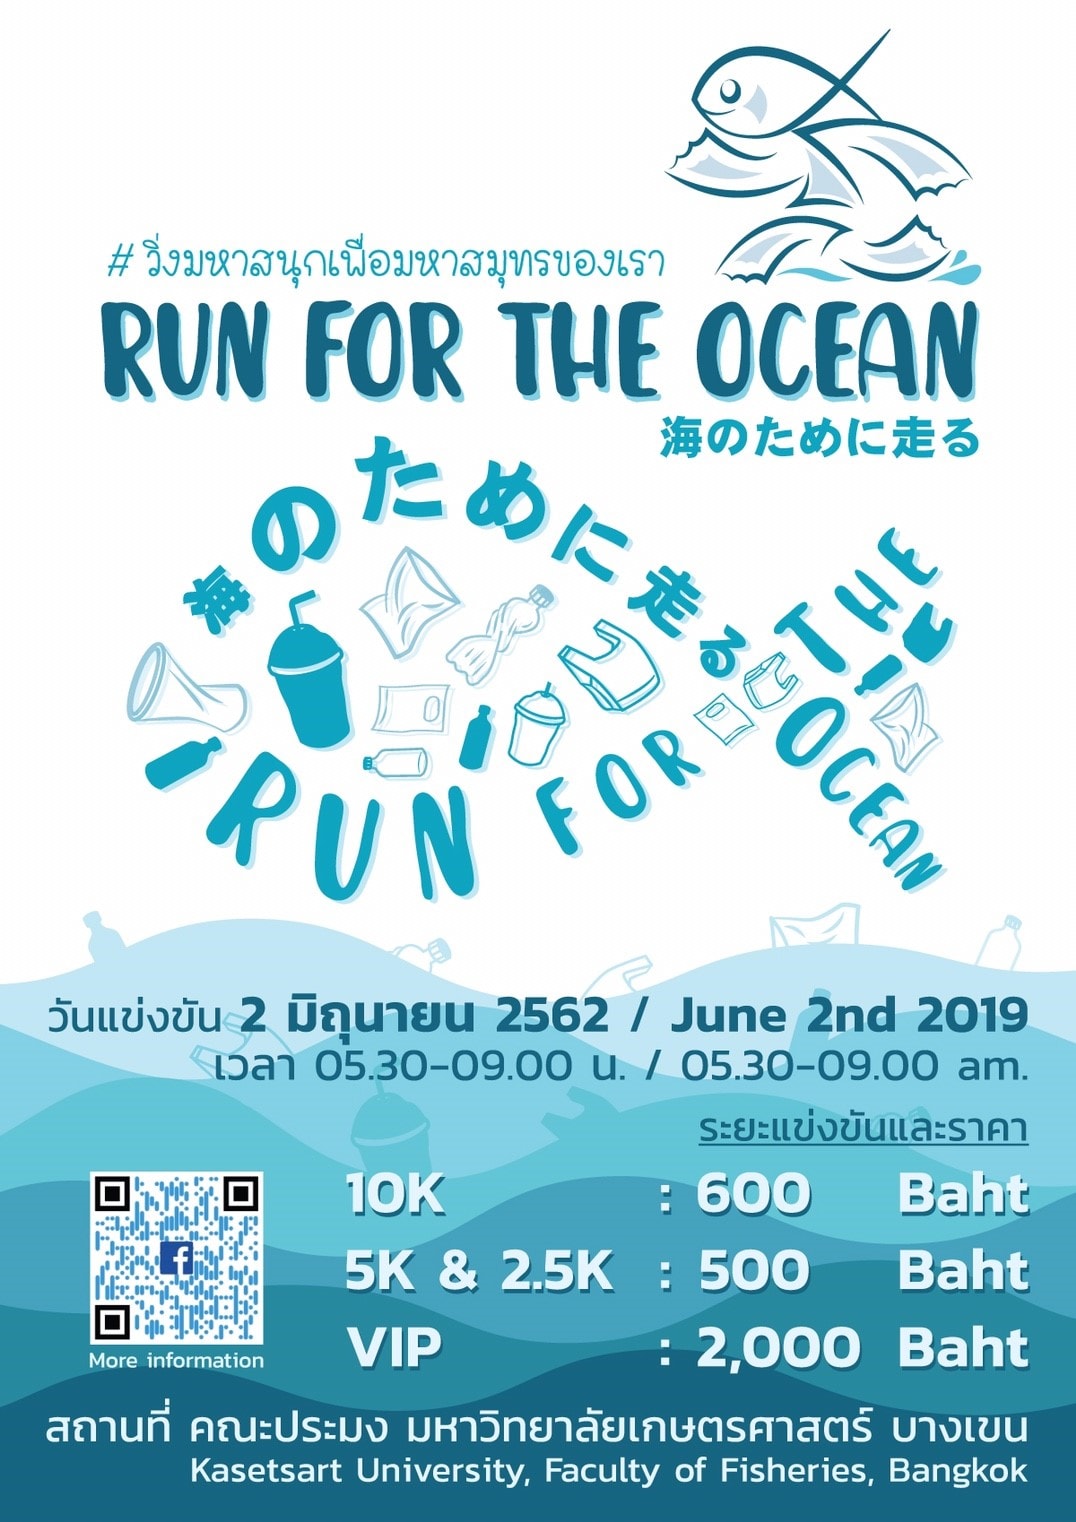 RUN FOR THE OCEAN - RunLah